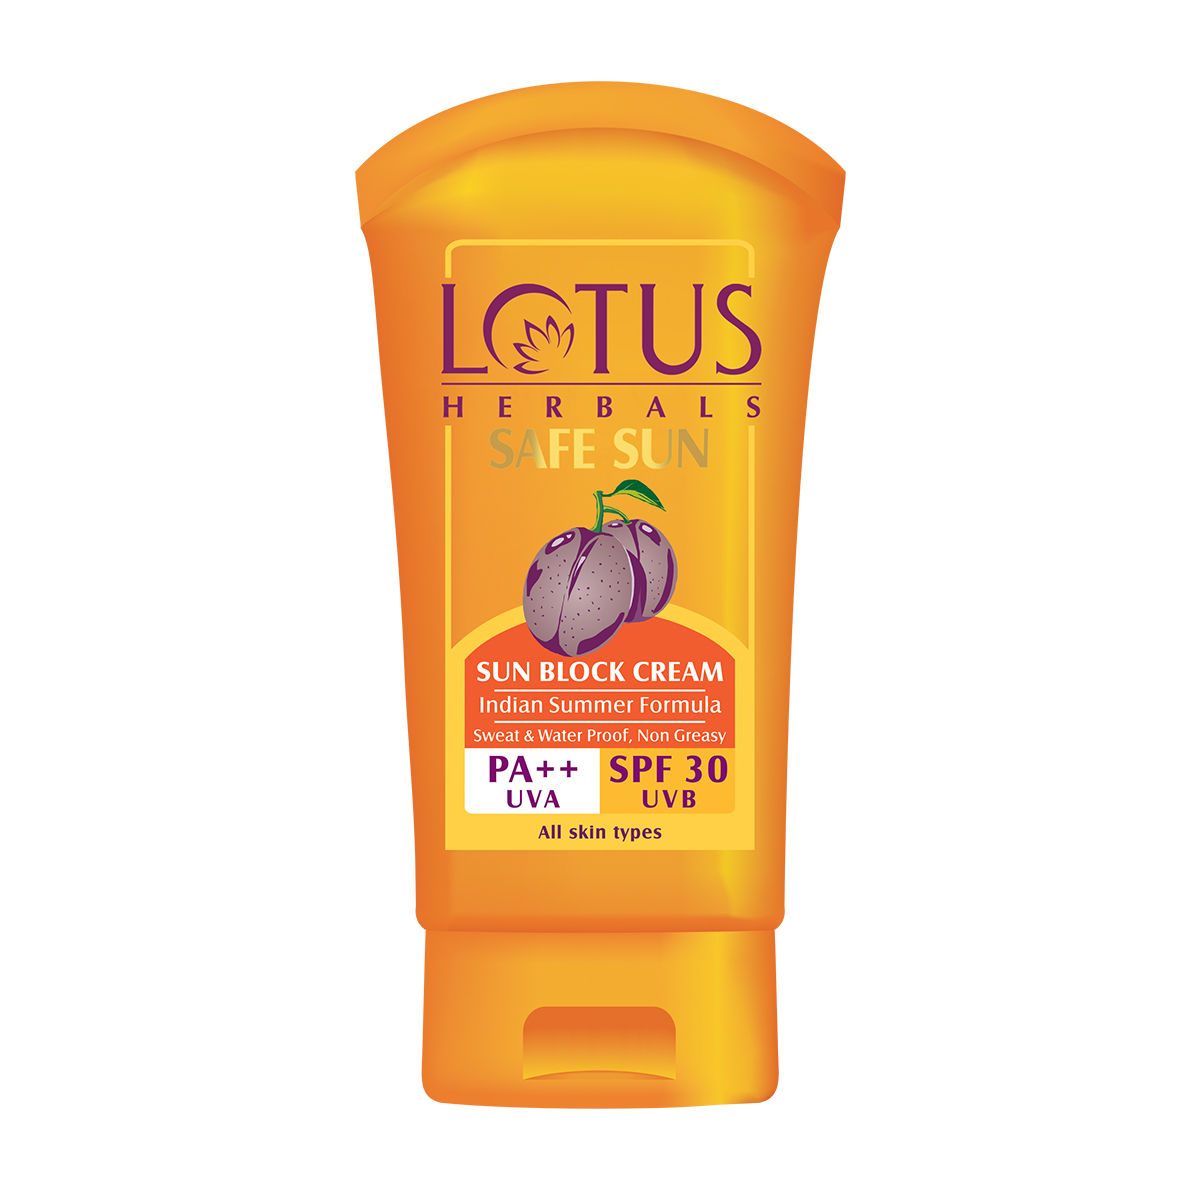 Lotus Herbals Safe Sun Sun Block Cream SPF 30, 100 gm, Pack of 1 